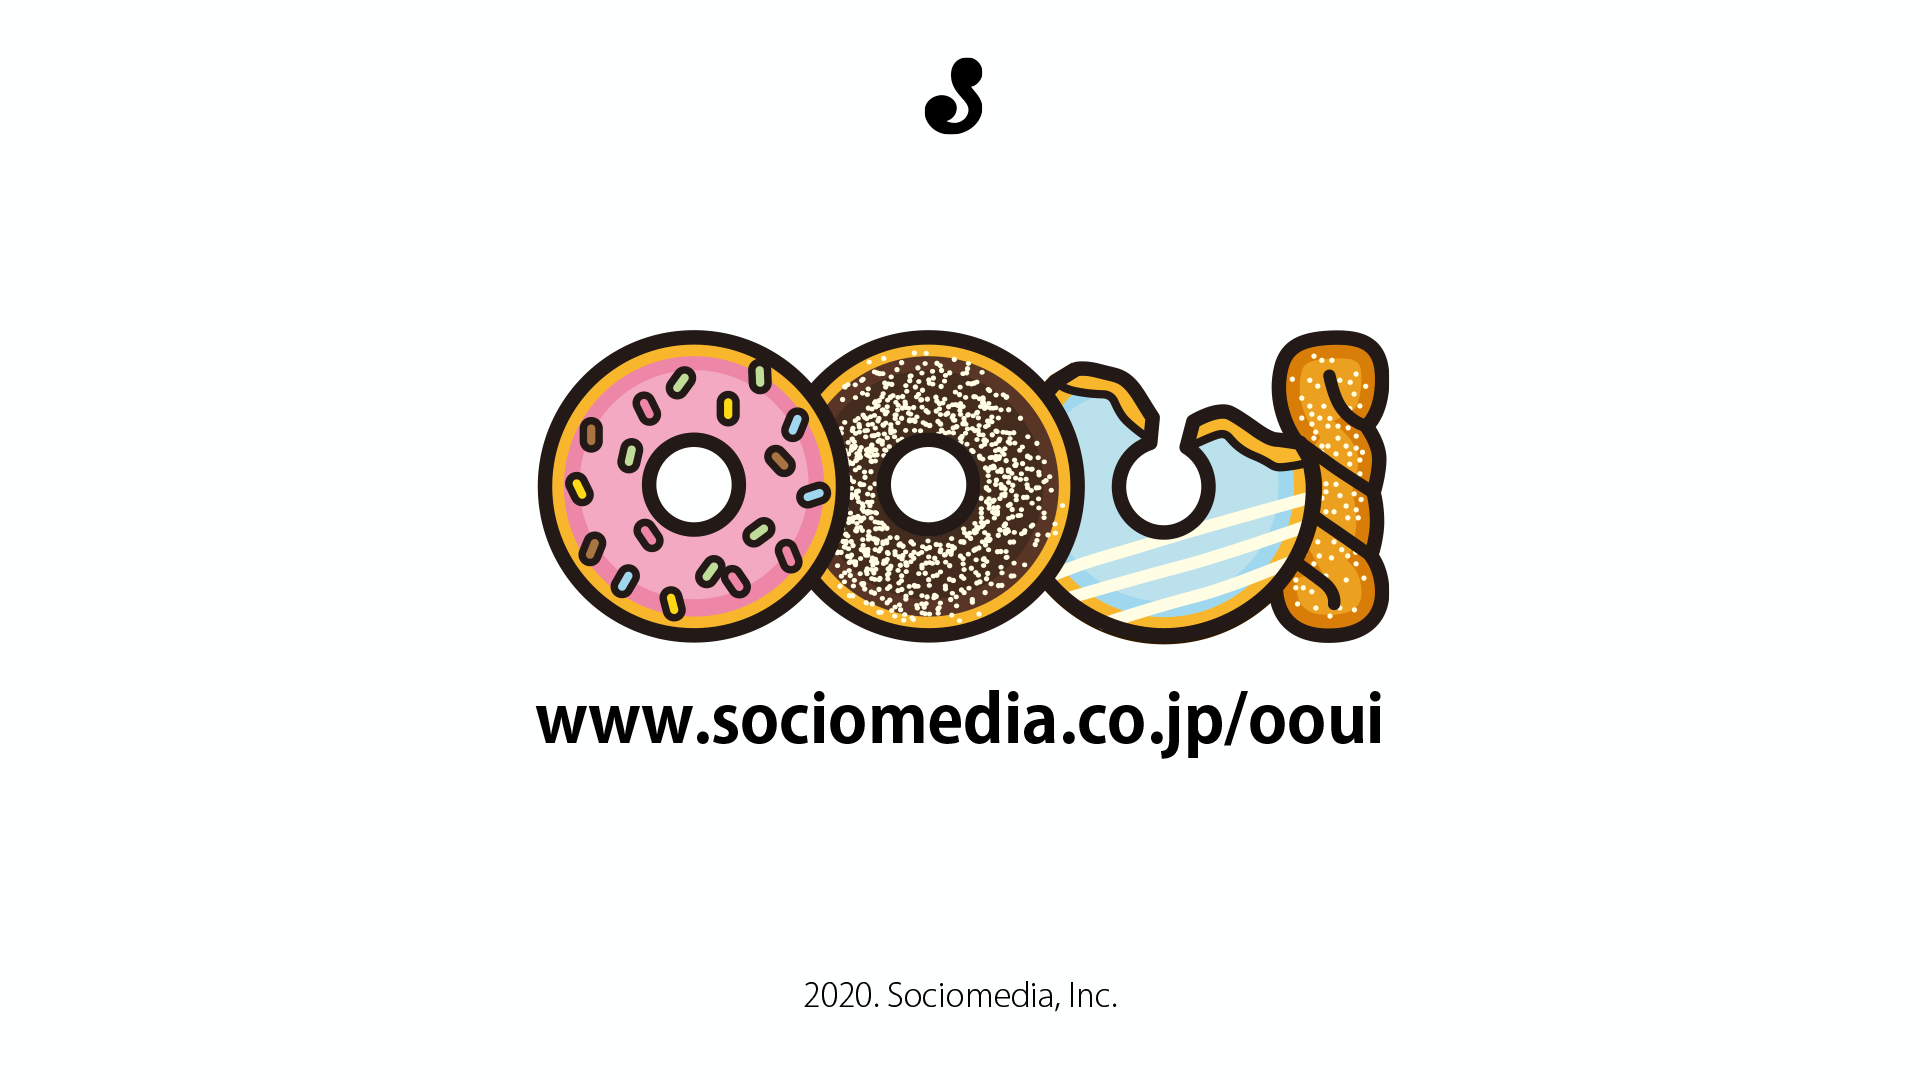 OOUI www.sociomedia.co.jp/ooui 2020. Sociomedia, Inc.